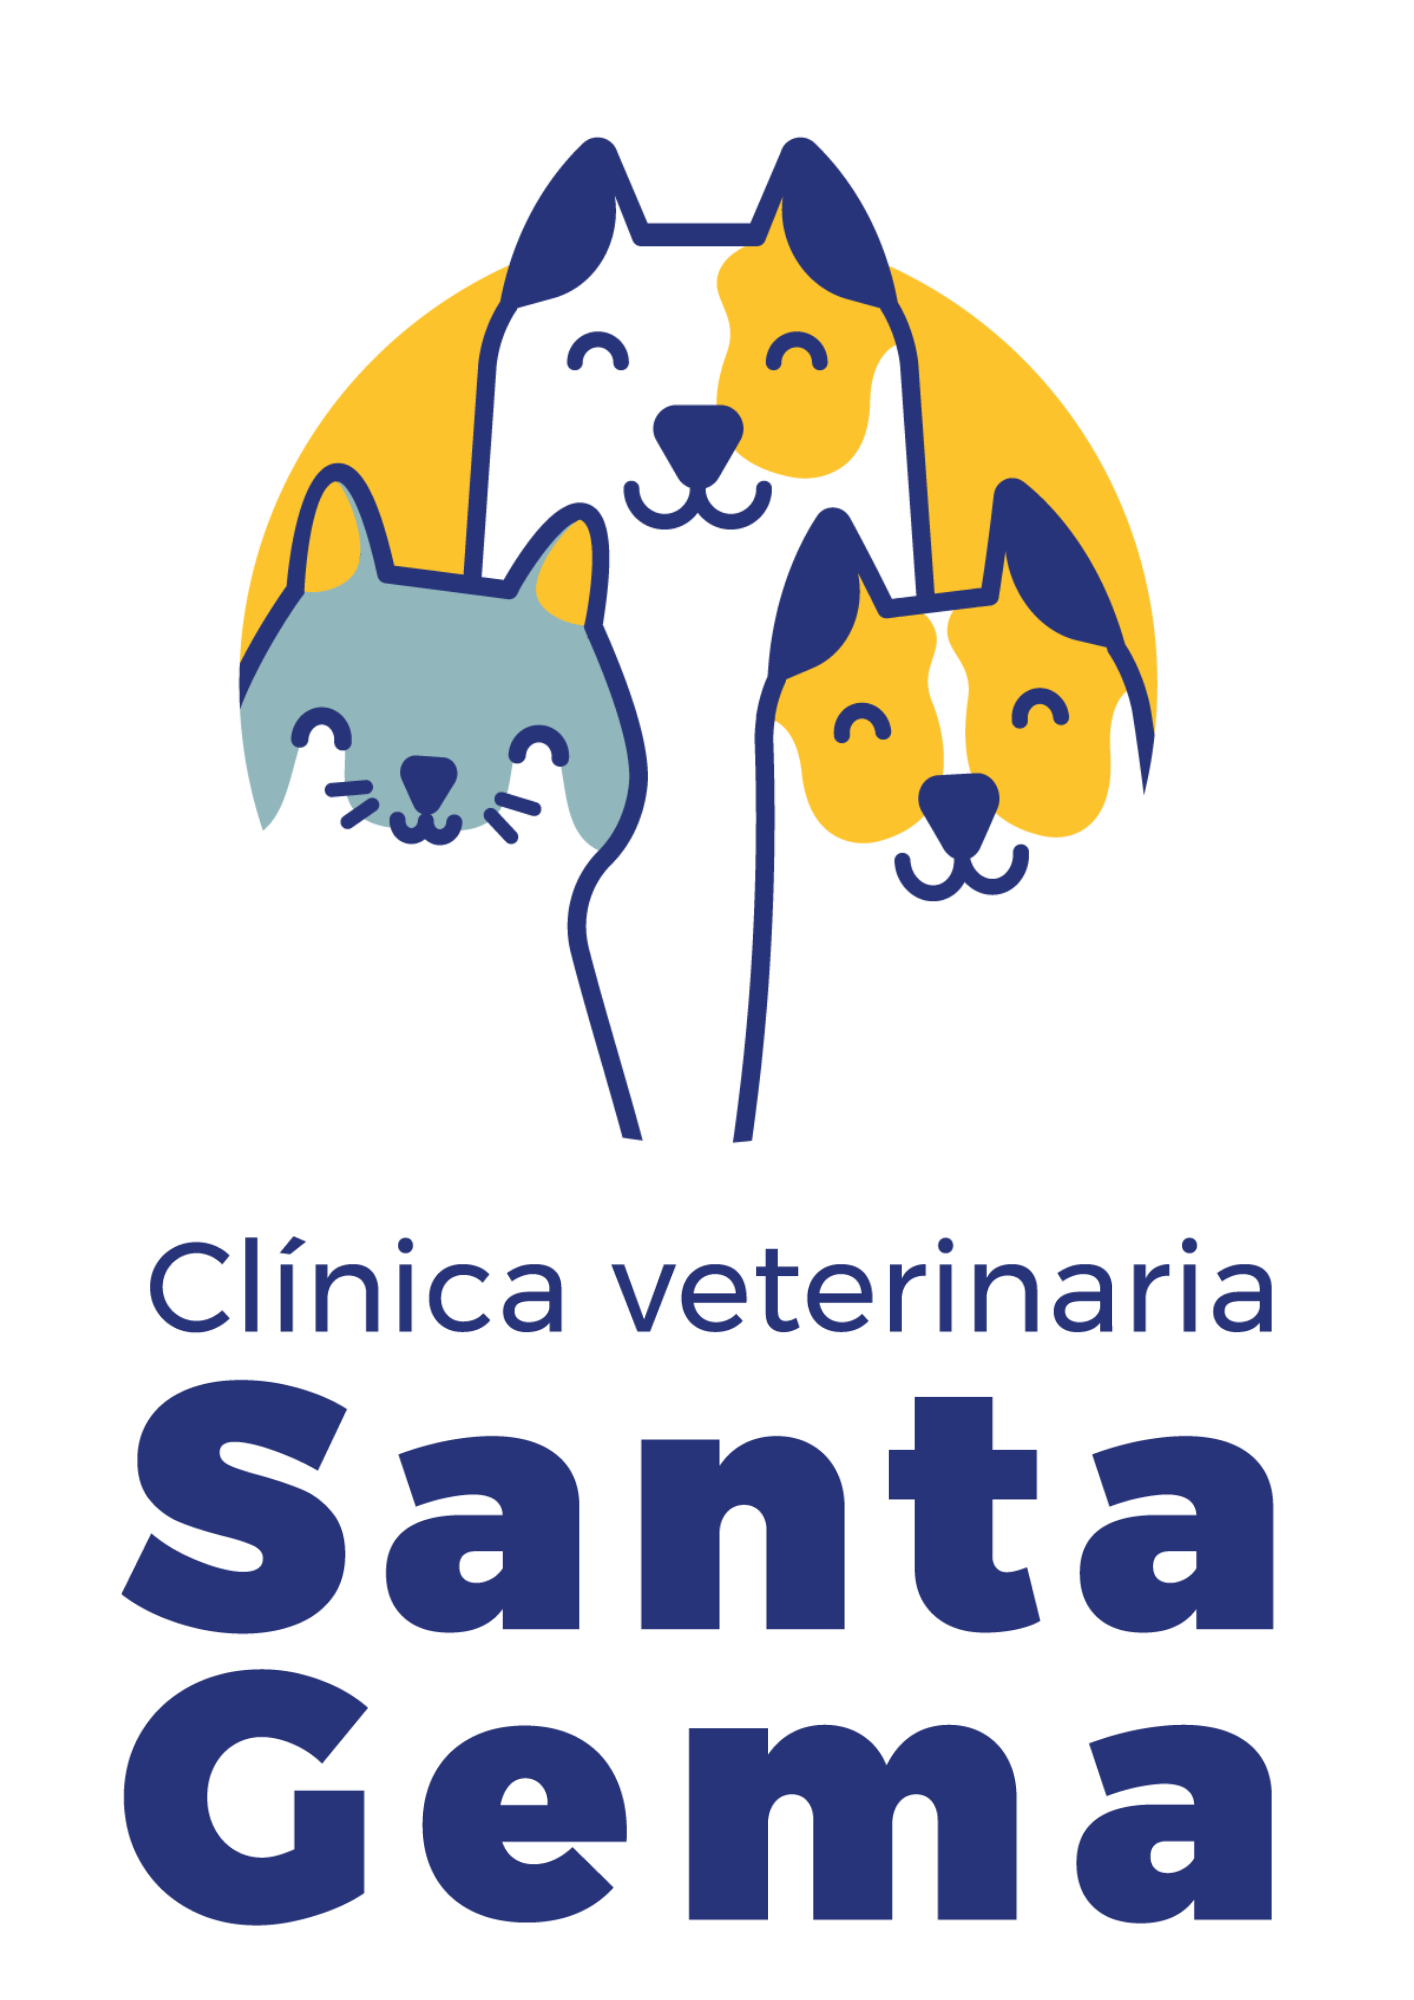 Clínica Veterinaria Santa Gema